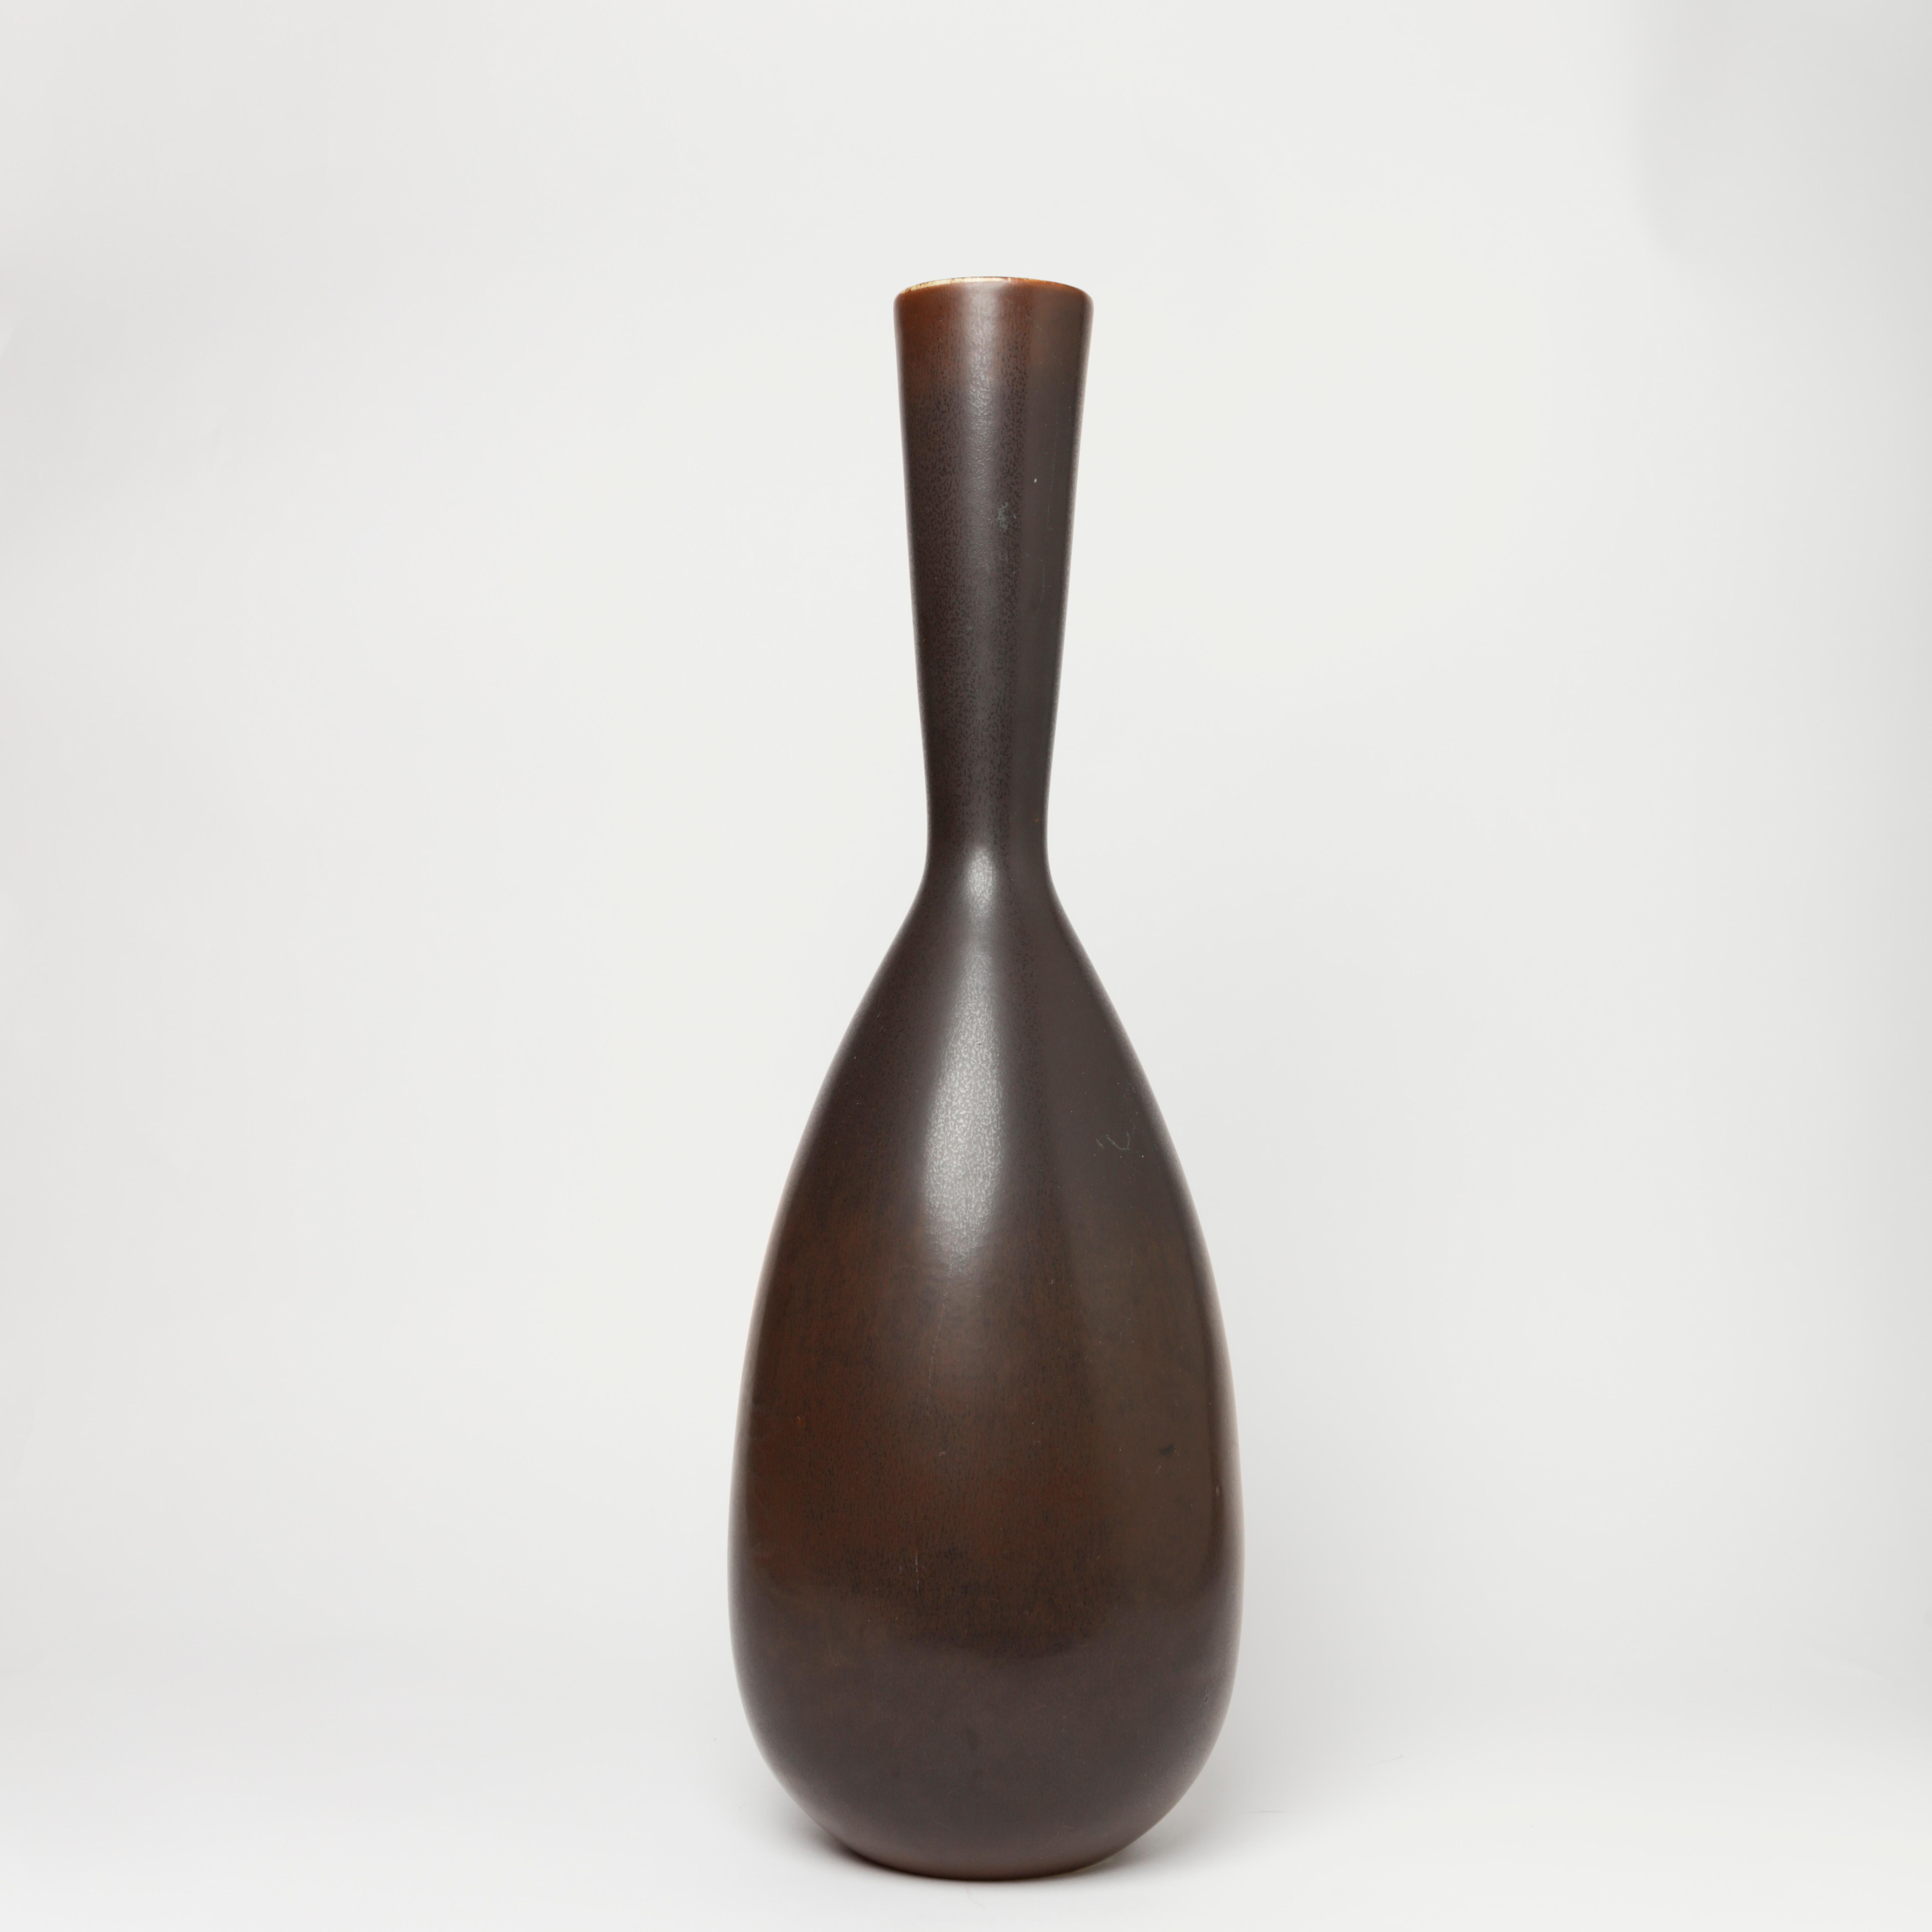 Stoneware floor vase by Carl-Harry Stålhane for Rörstrand 1950s with brown harefur glaze.
Measure: Height 60cm/17.3